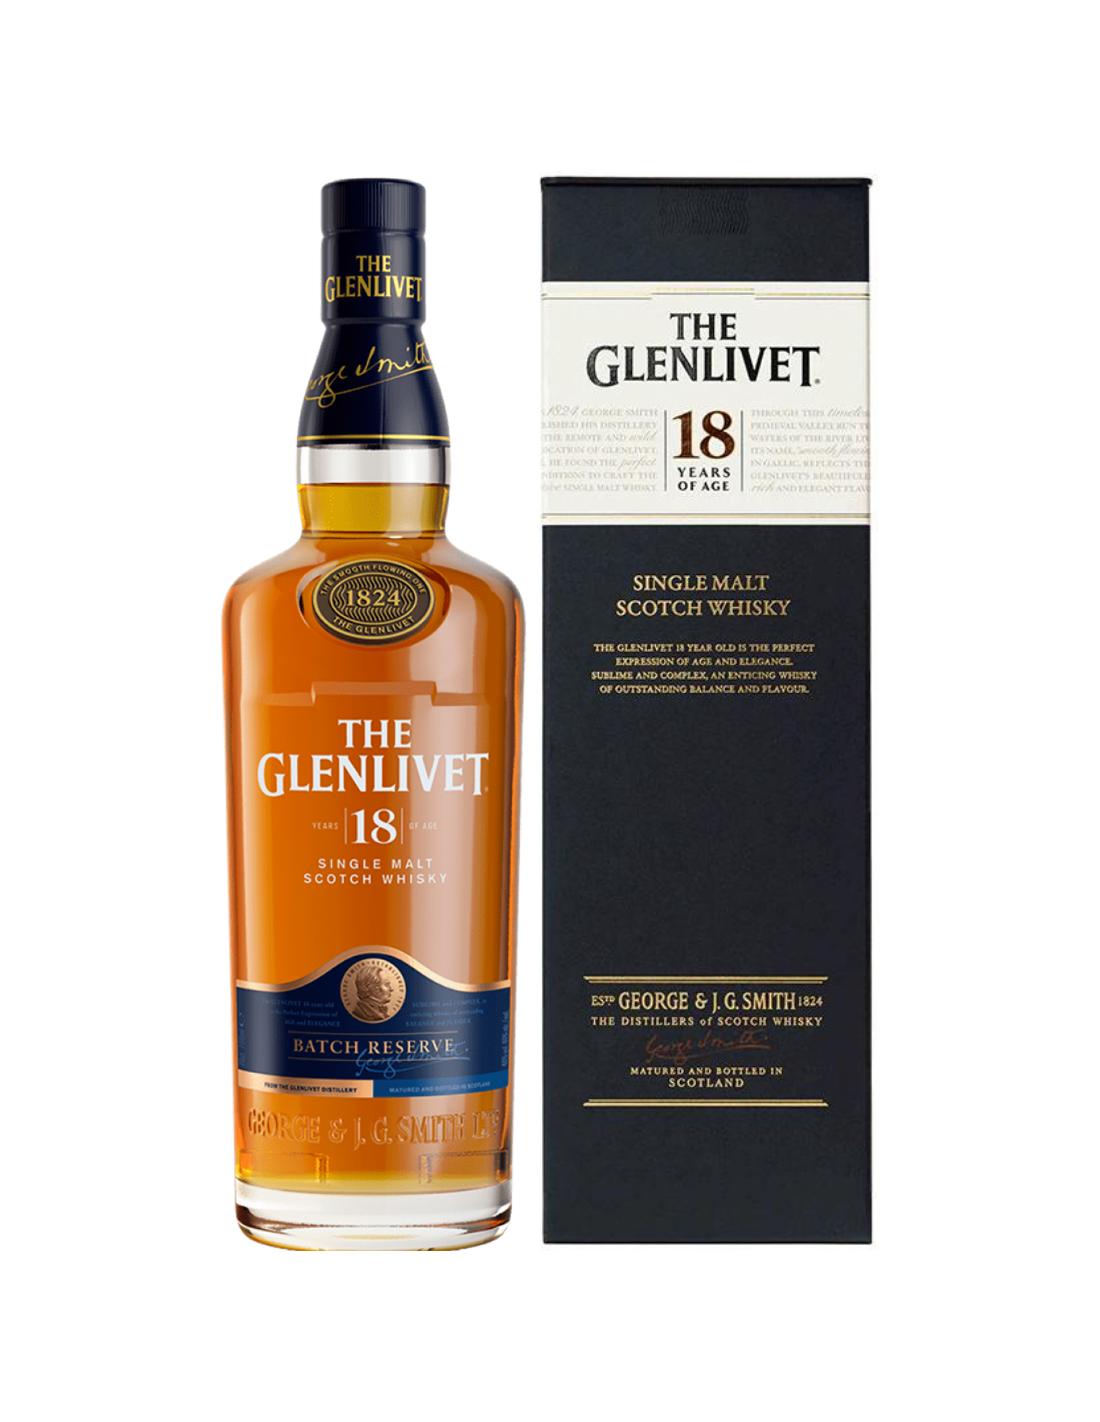 Whisky The Glenlivet, 0.7L, 18 ani, 40% alc., Scotia alcooldiscount.ro